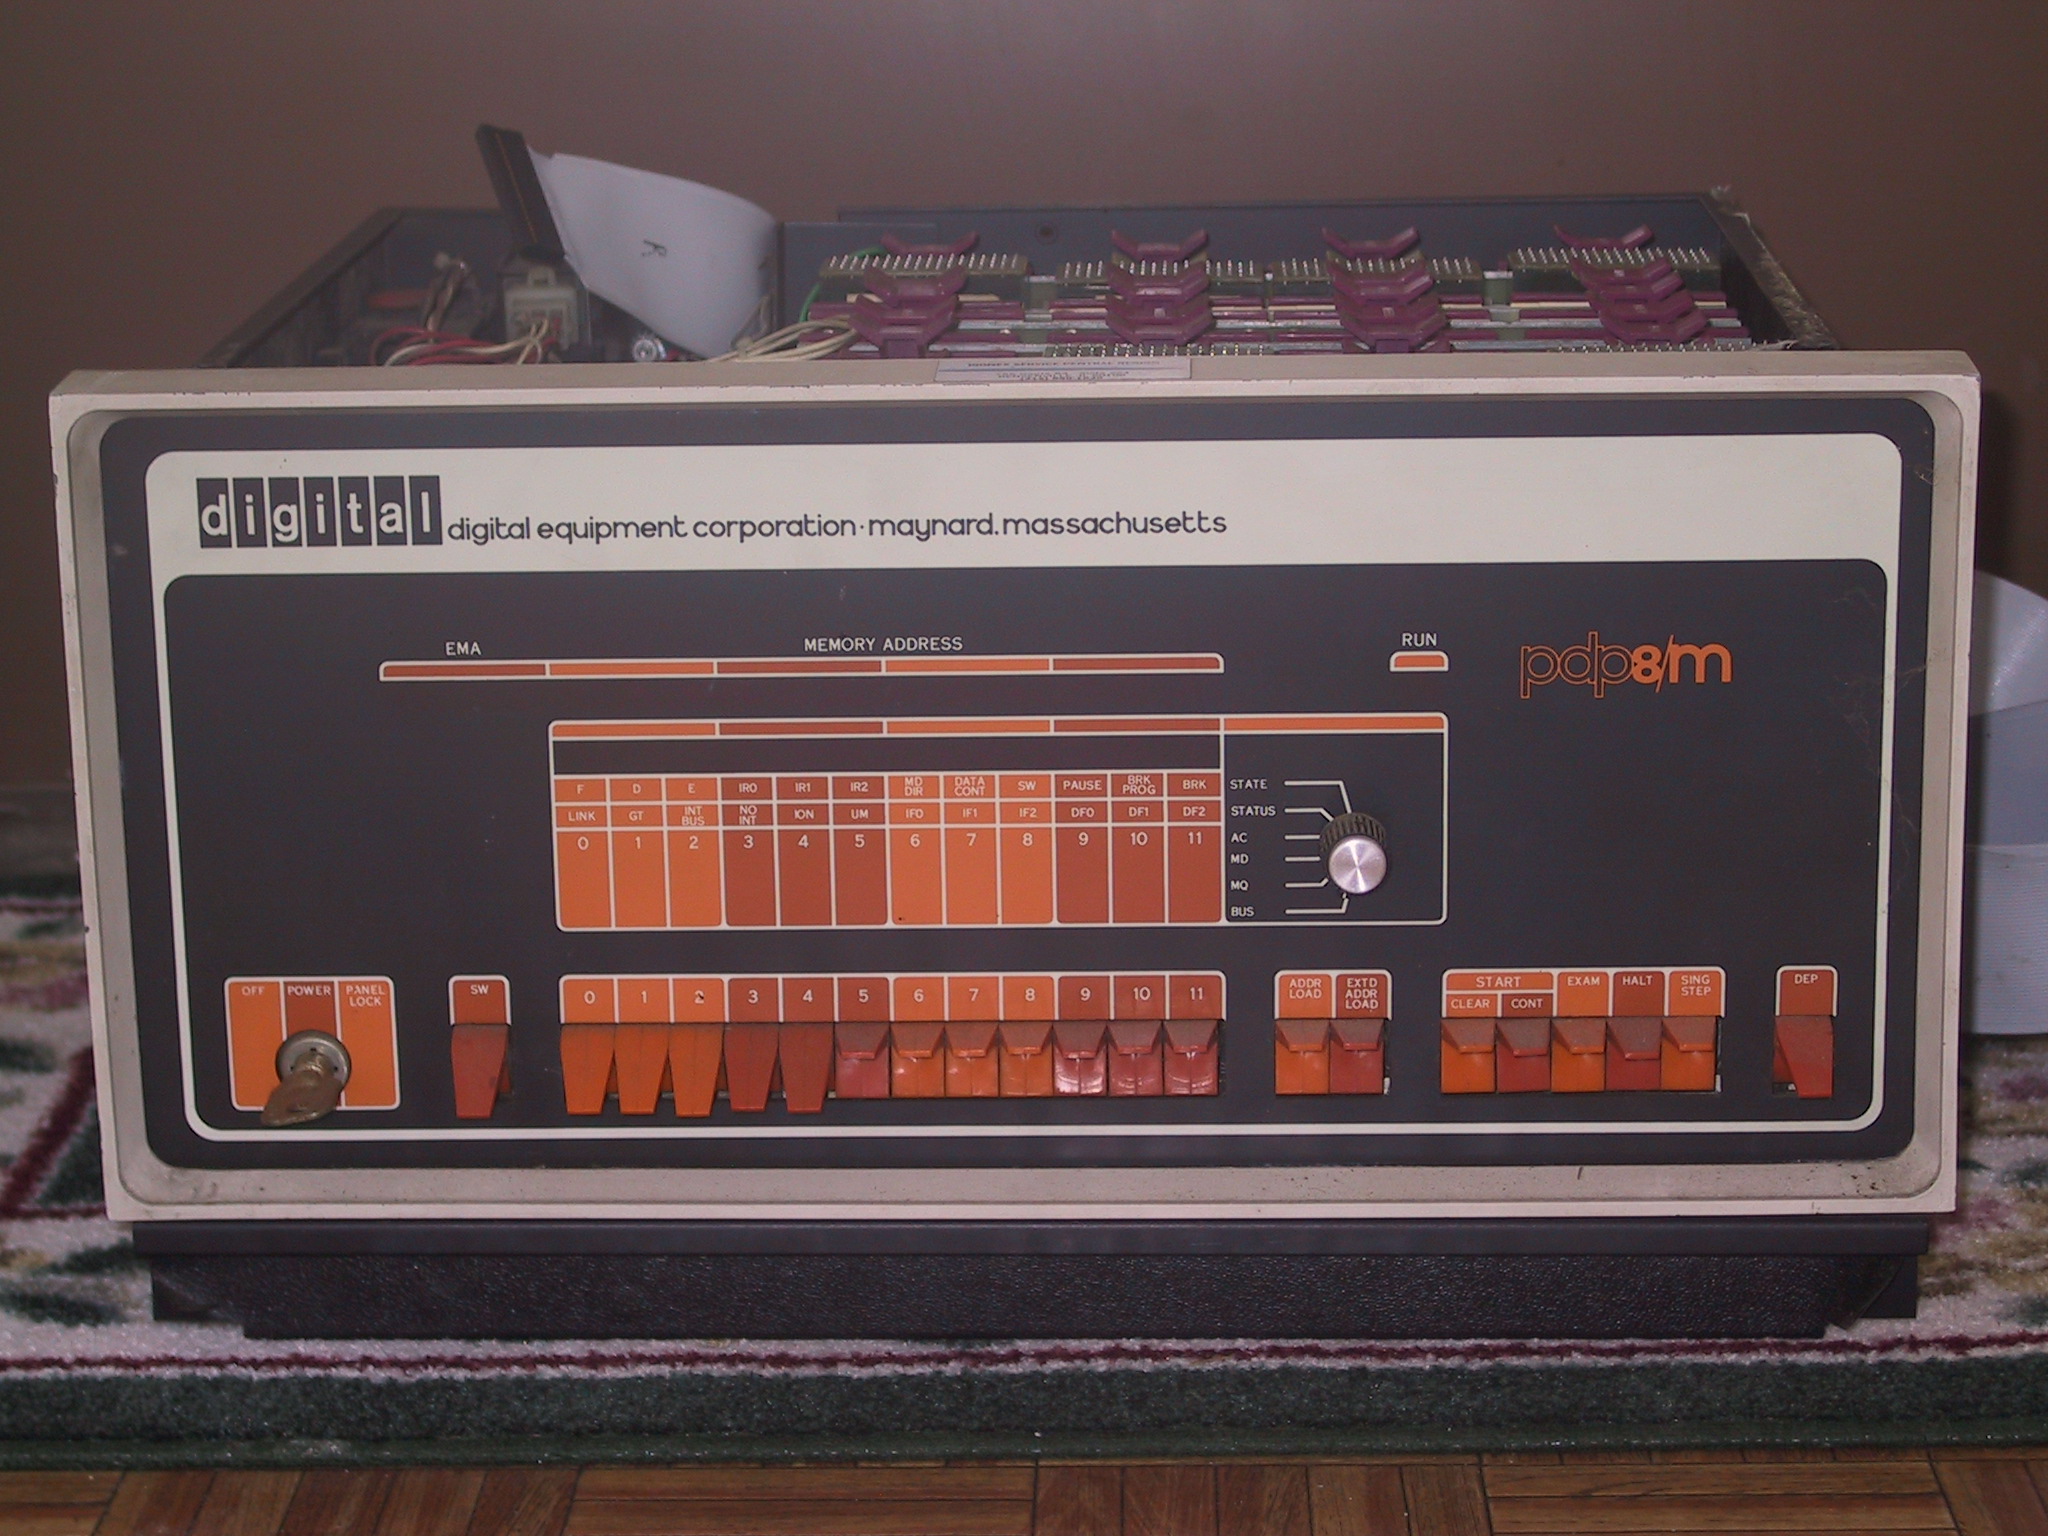 PDP-8/m